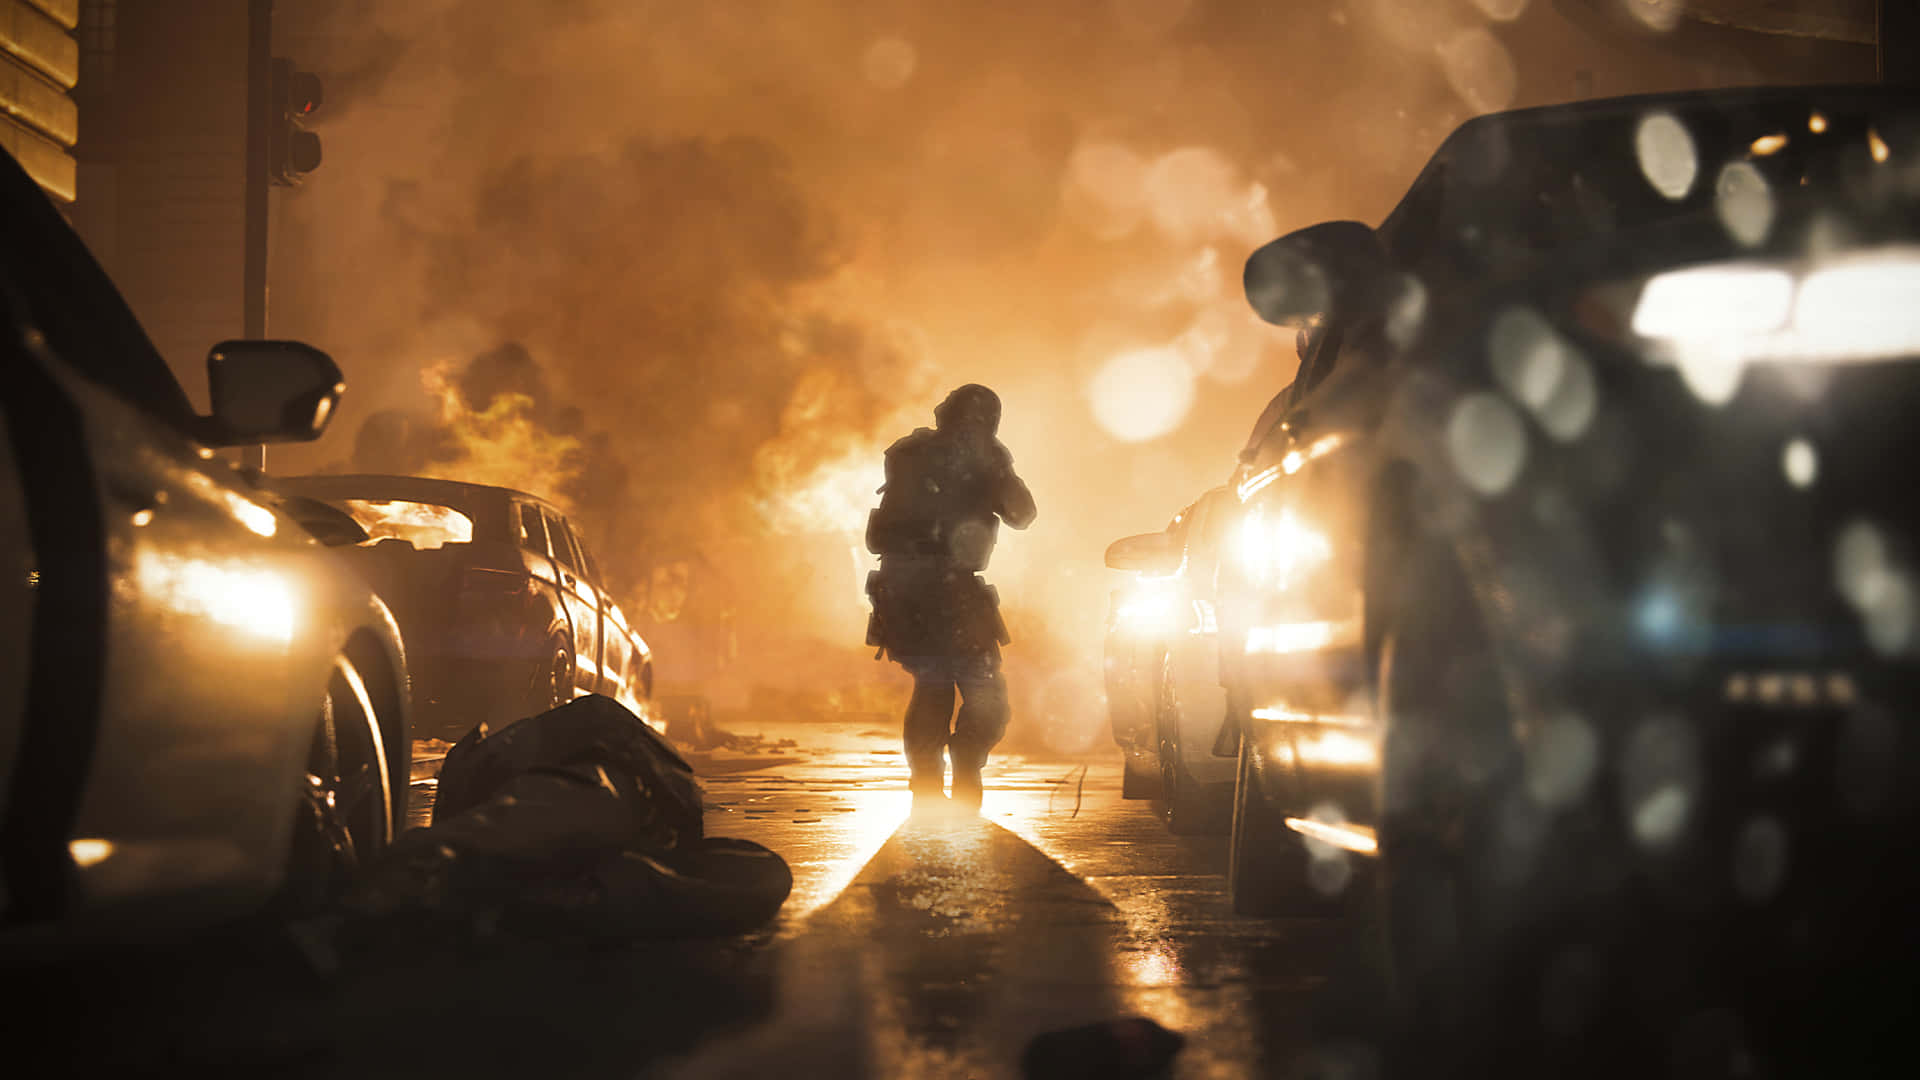 4k Call Of Duty Modern Warfare Background Soldier In An Urban Street